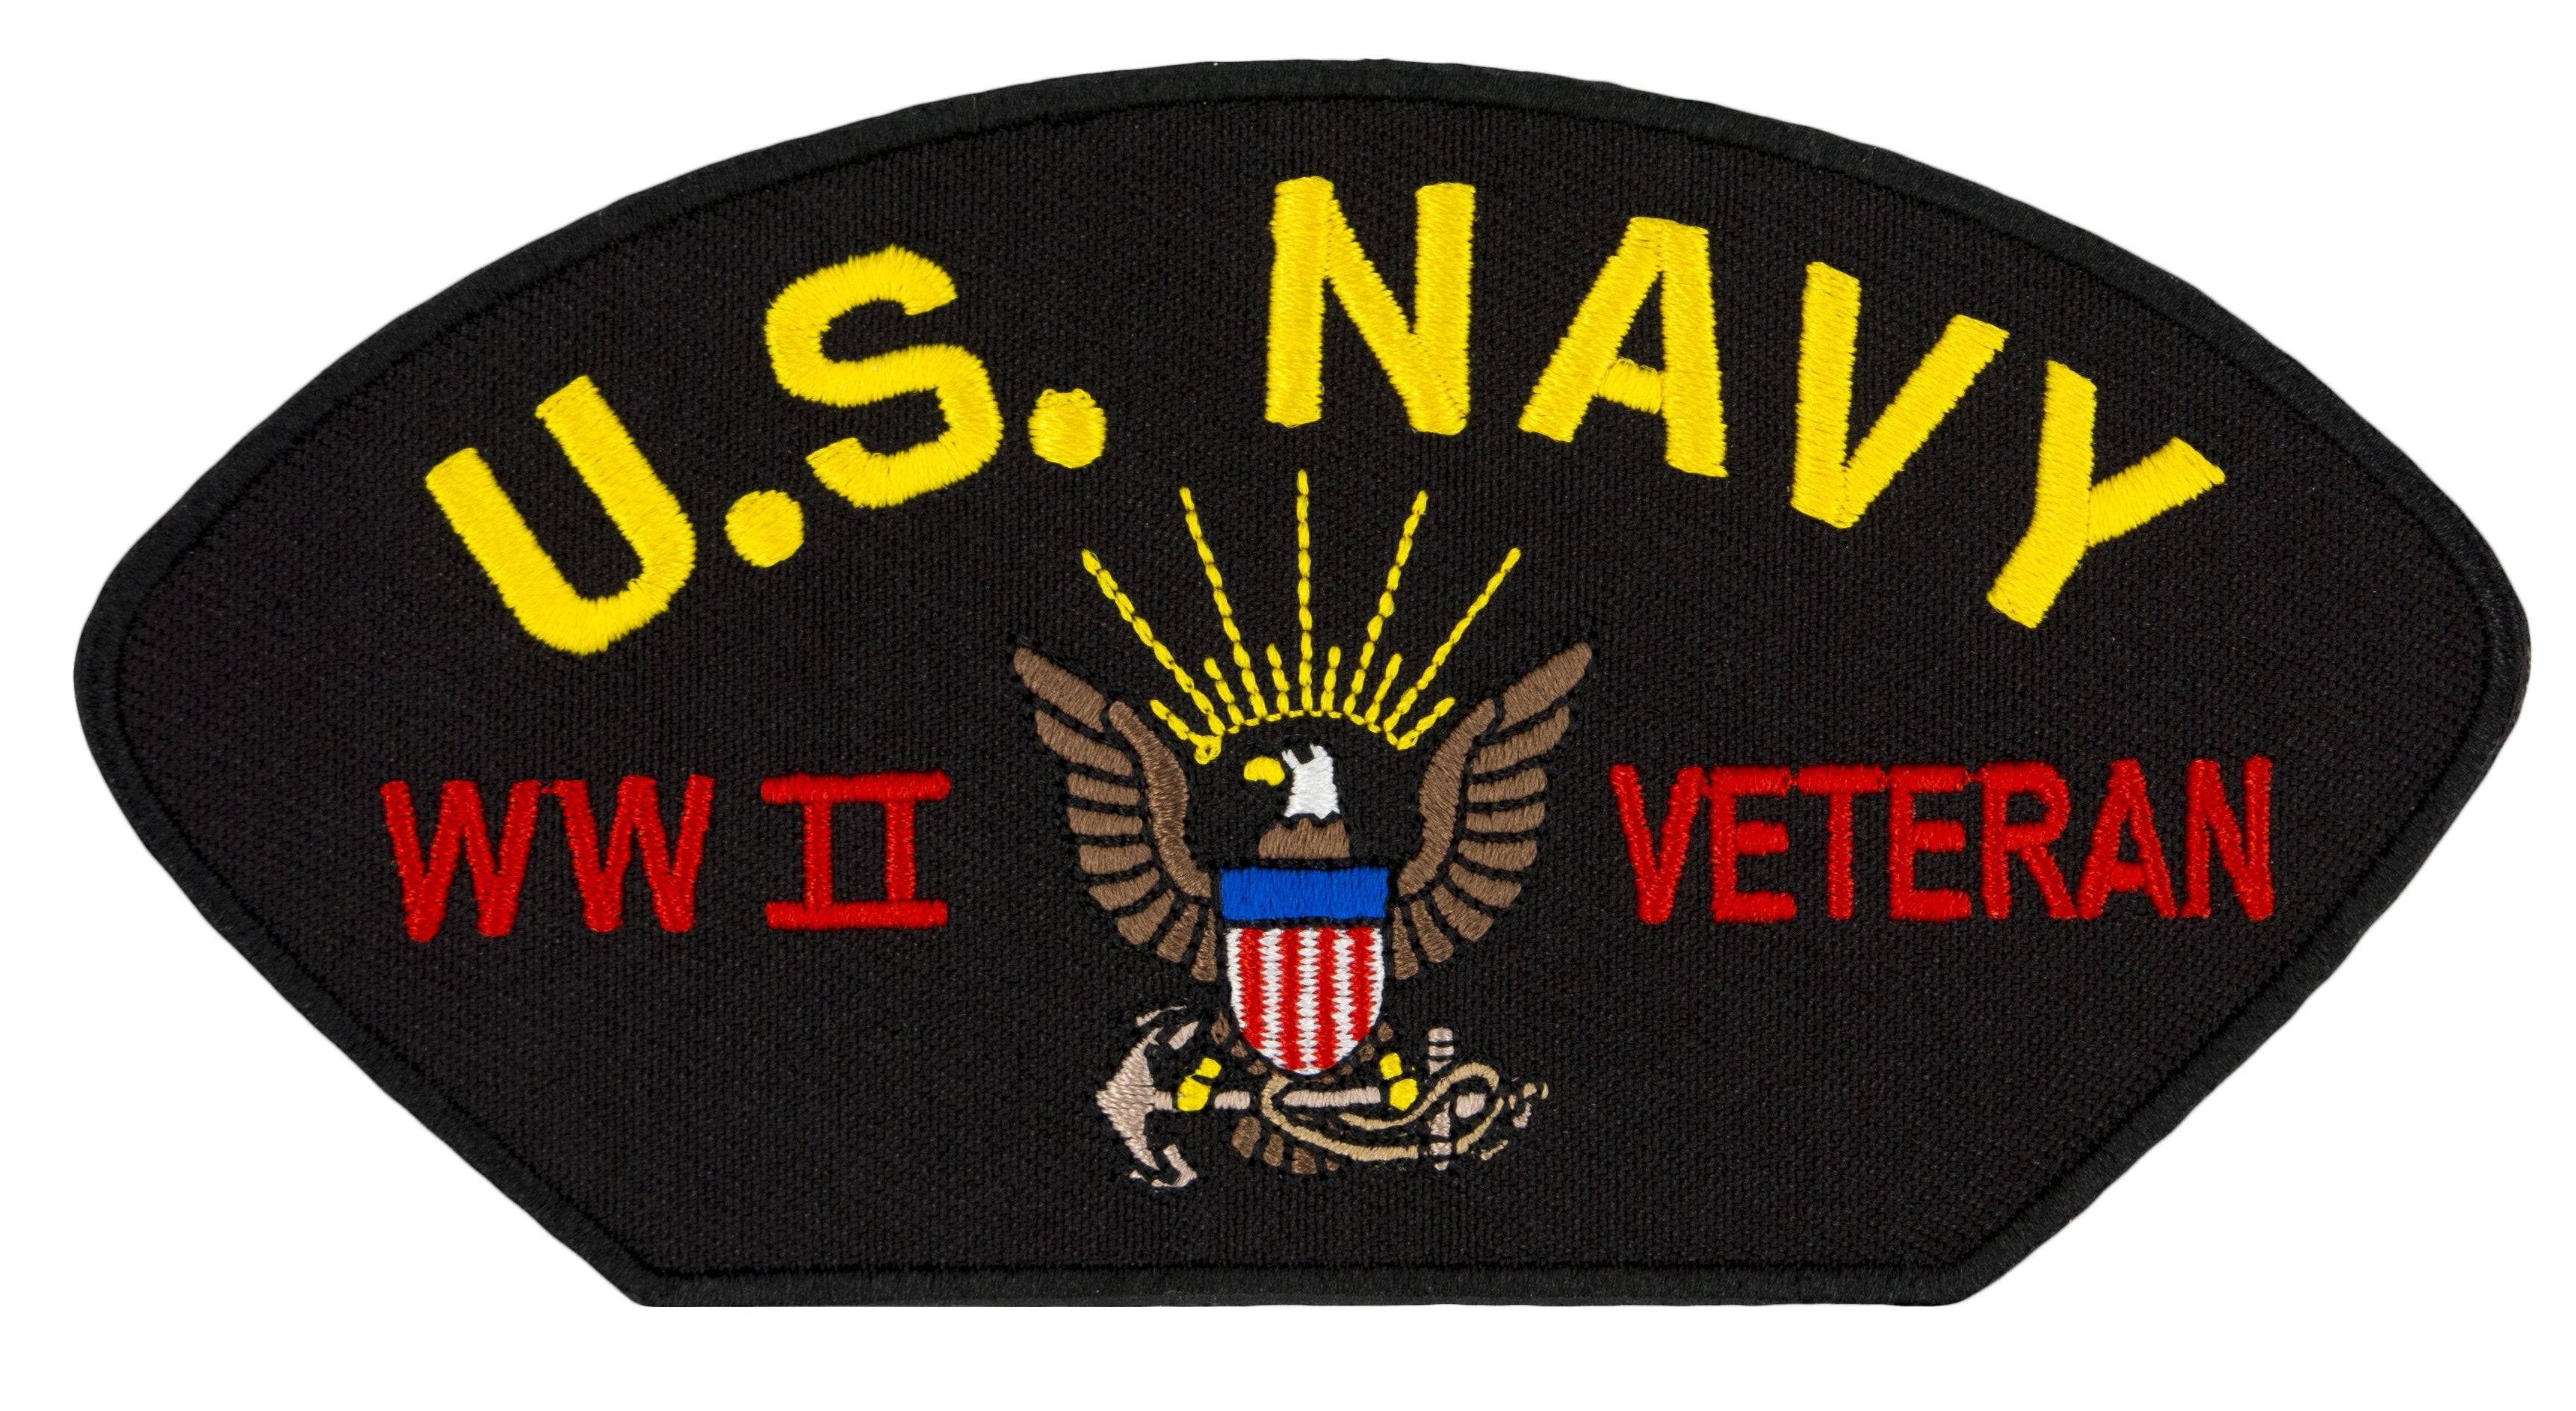 US Navy - World War II Veteran Embroidered Patch 5 3/16" x 2 5/8"